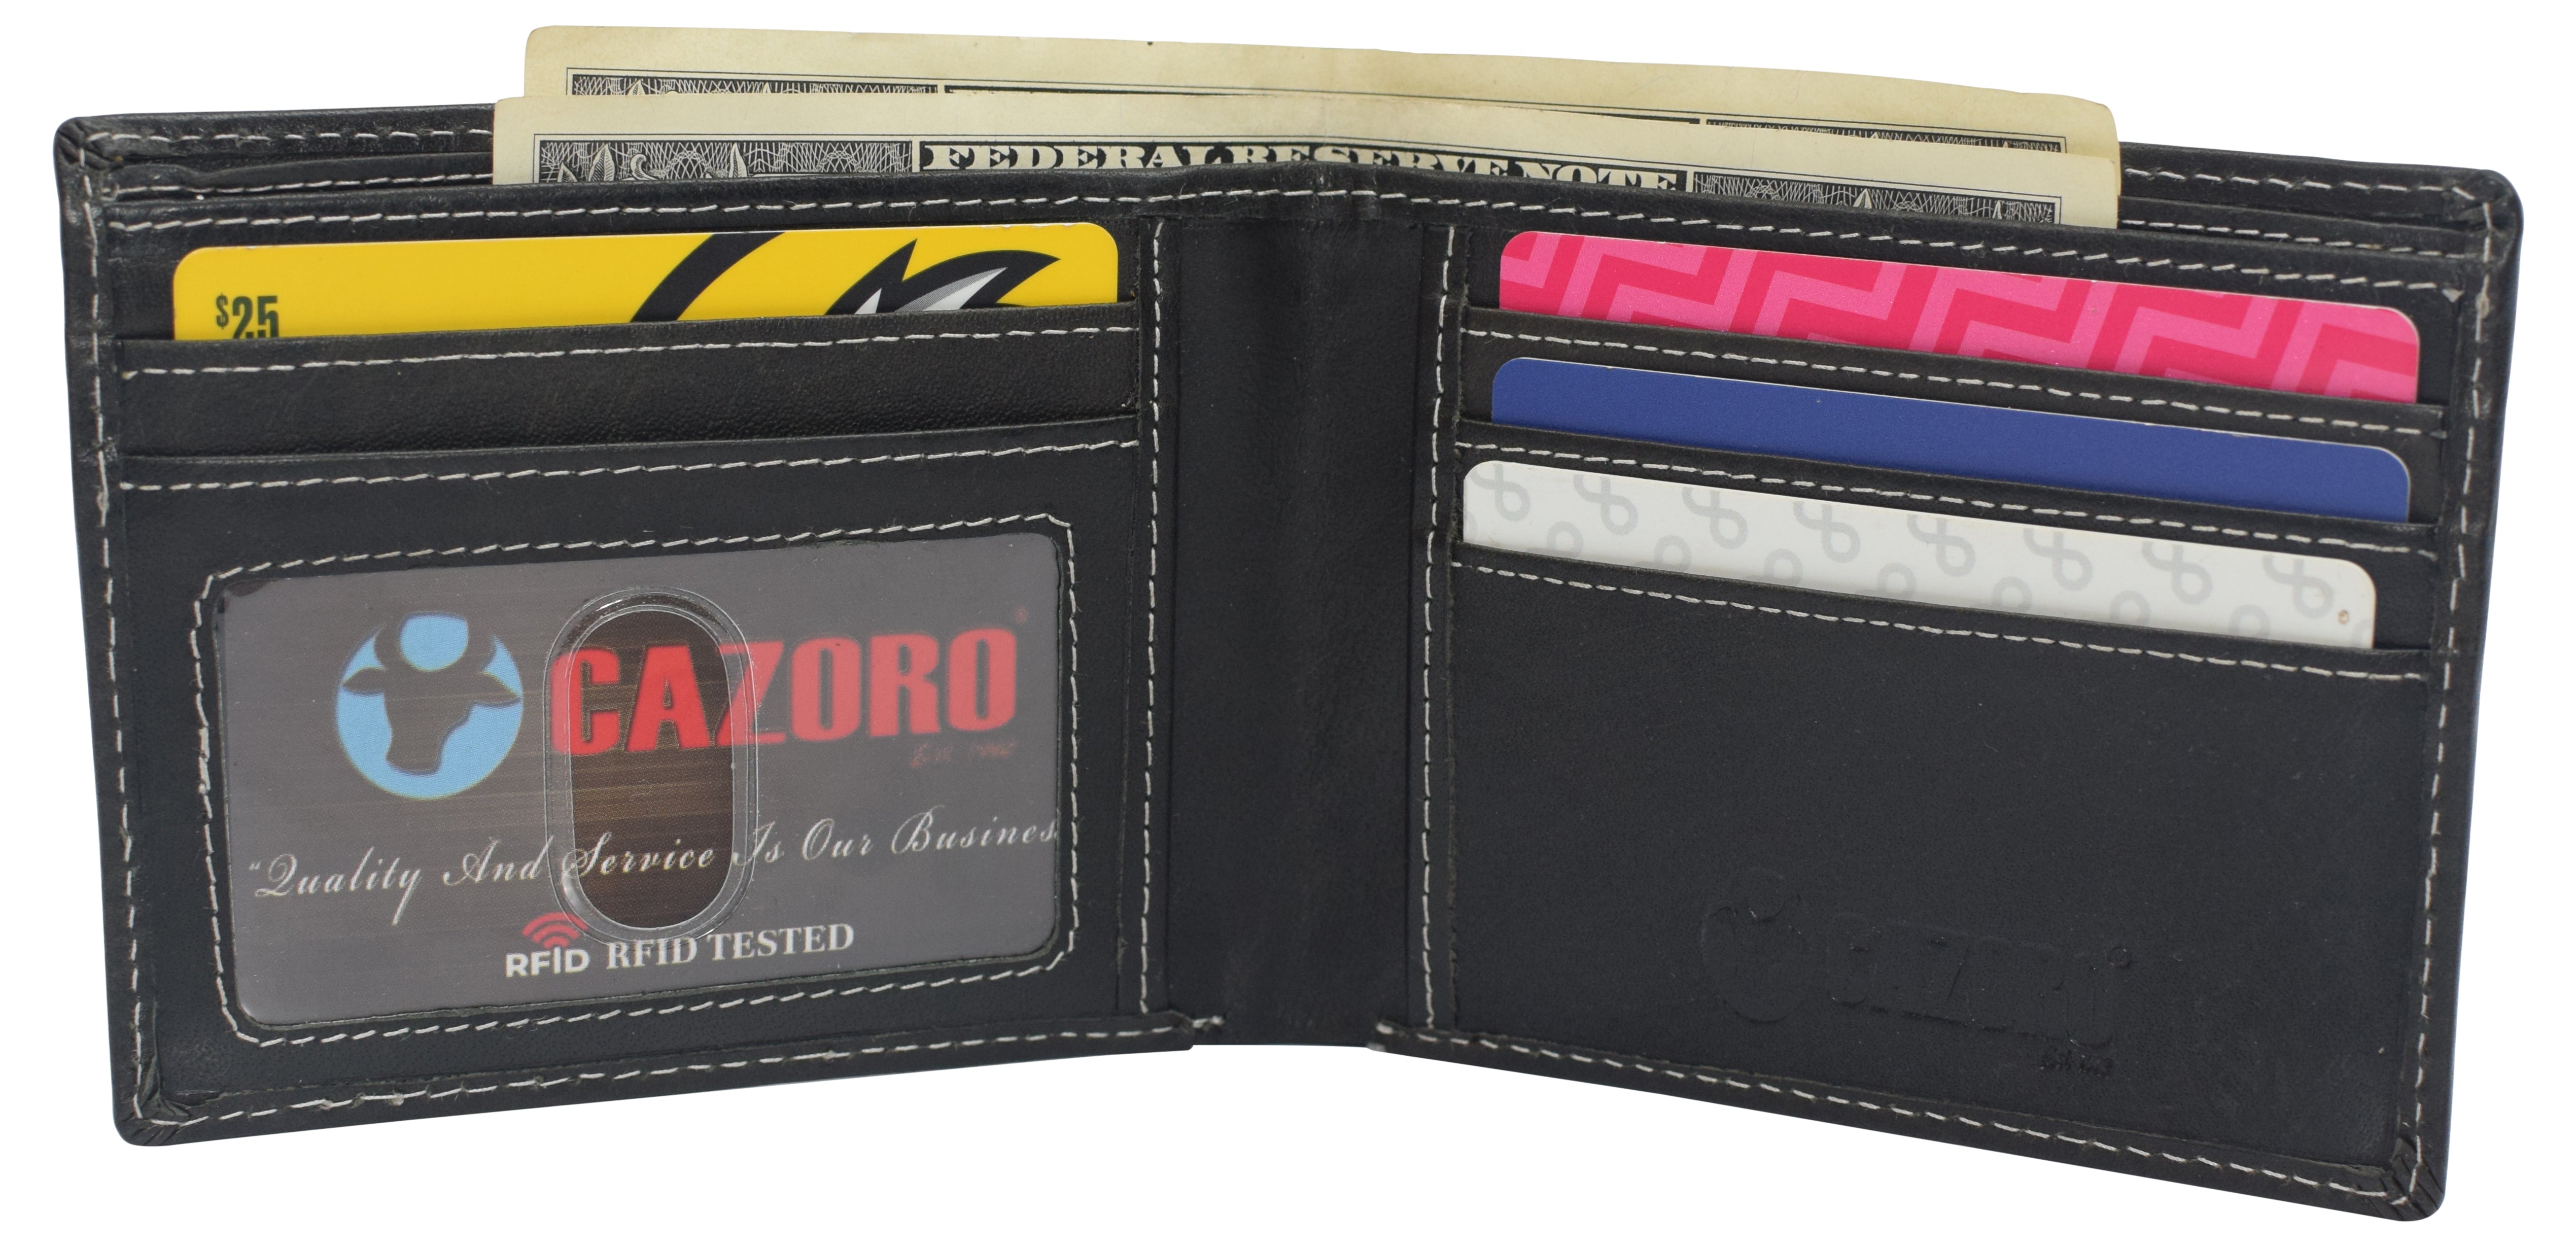 Genuine Leather Full Grain Womens Card Holder Ladies Wallet Slim Design Bifold RFID Blocking